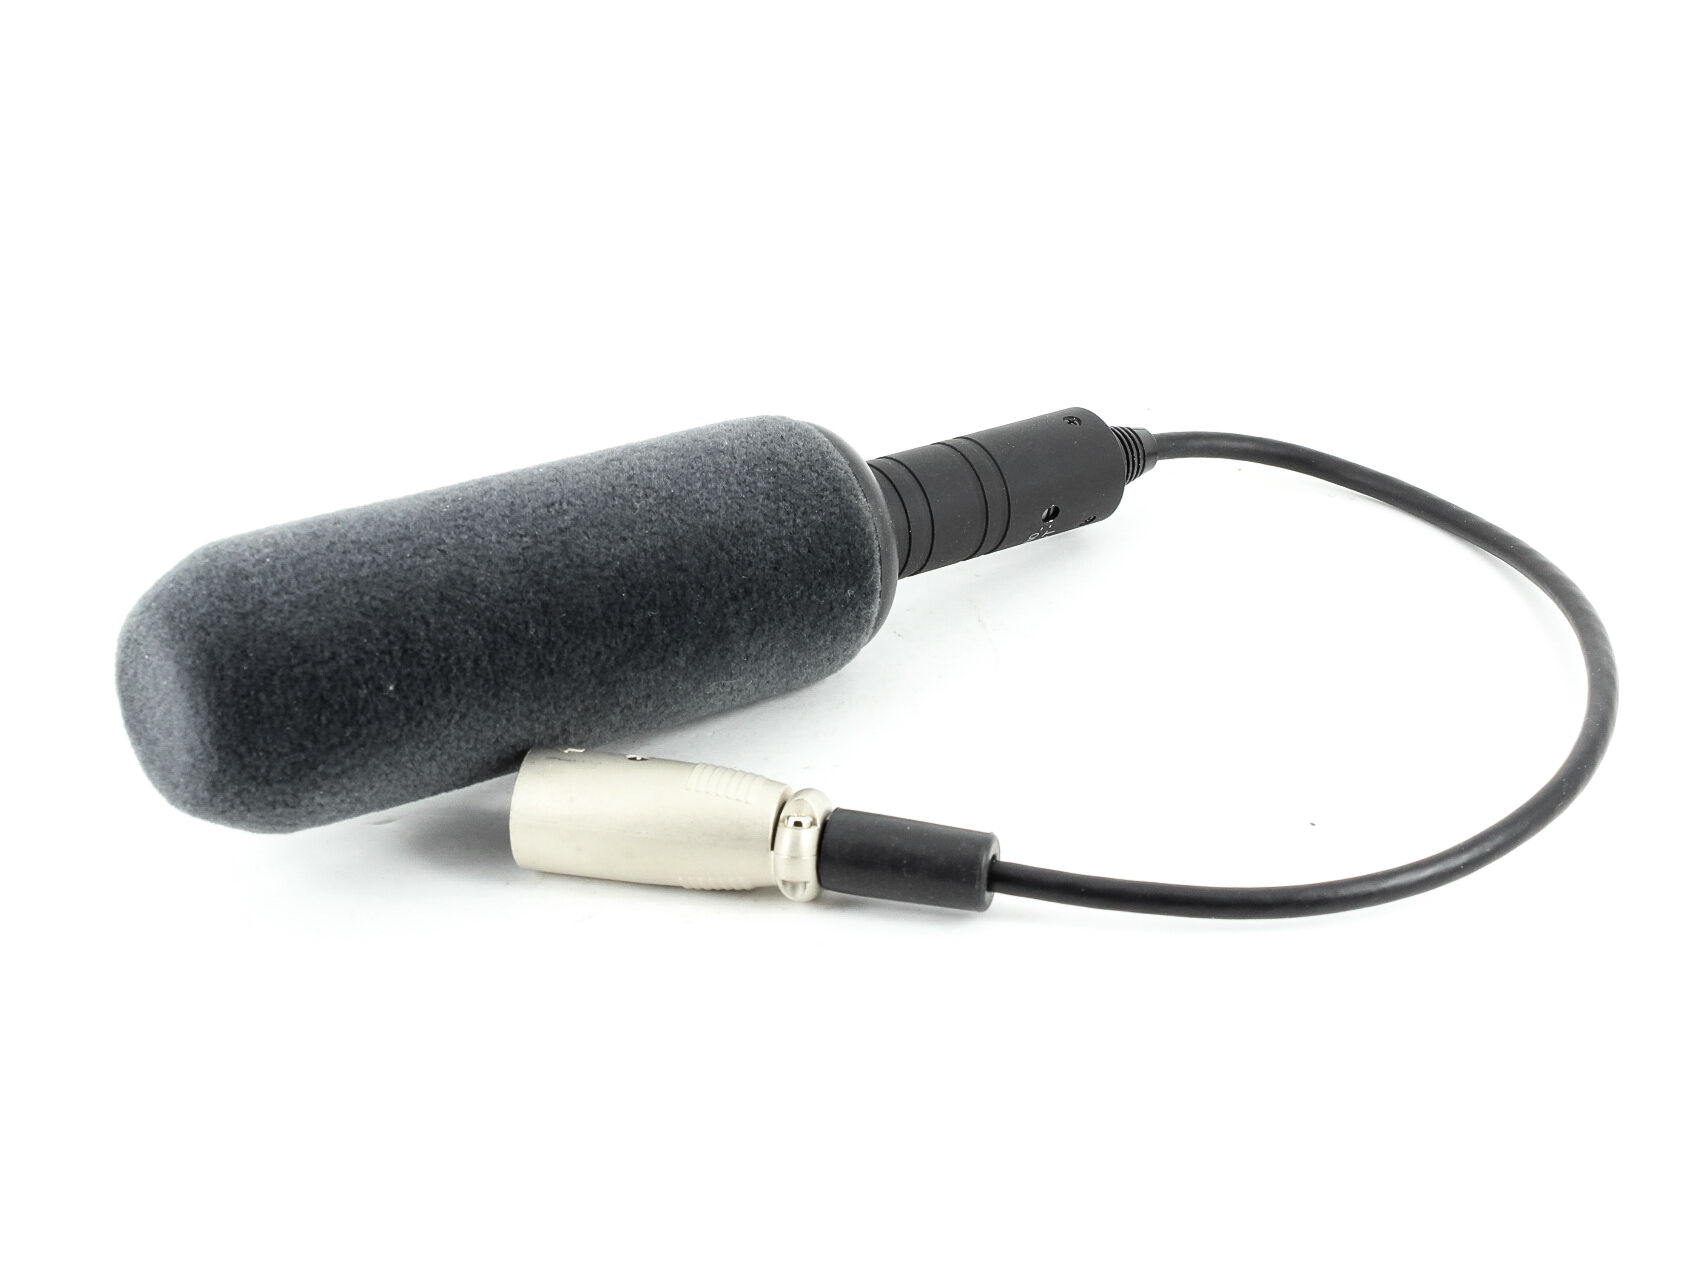 panasonic aj-mc900g stereo microphone (condition: excellent)